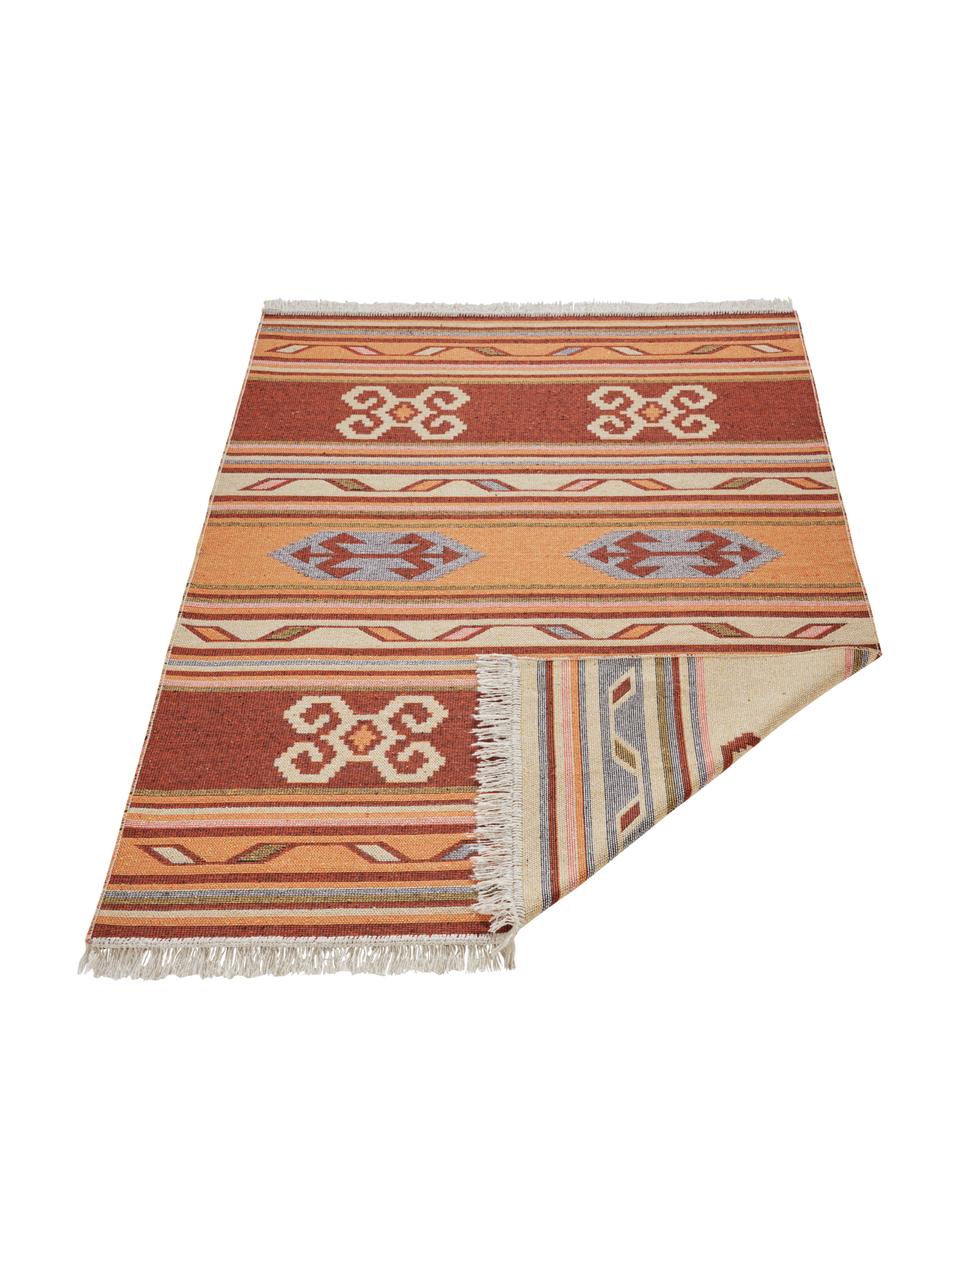 Kelim vloerkleed Tansa in ethnostijl van katoen, 100% katoen, Oranje, multicolour, B 160 x L 220 cm (maat M)